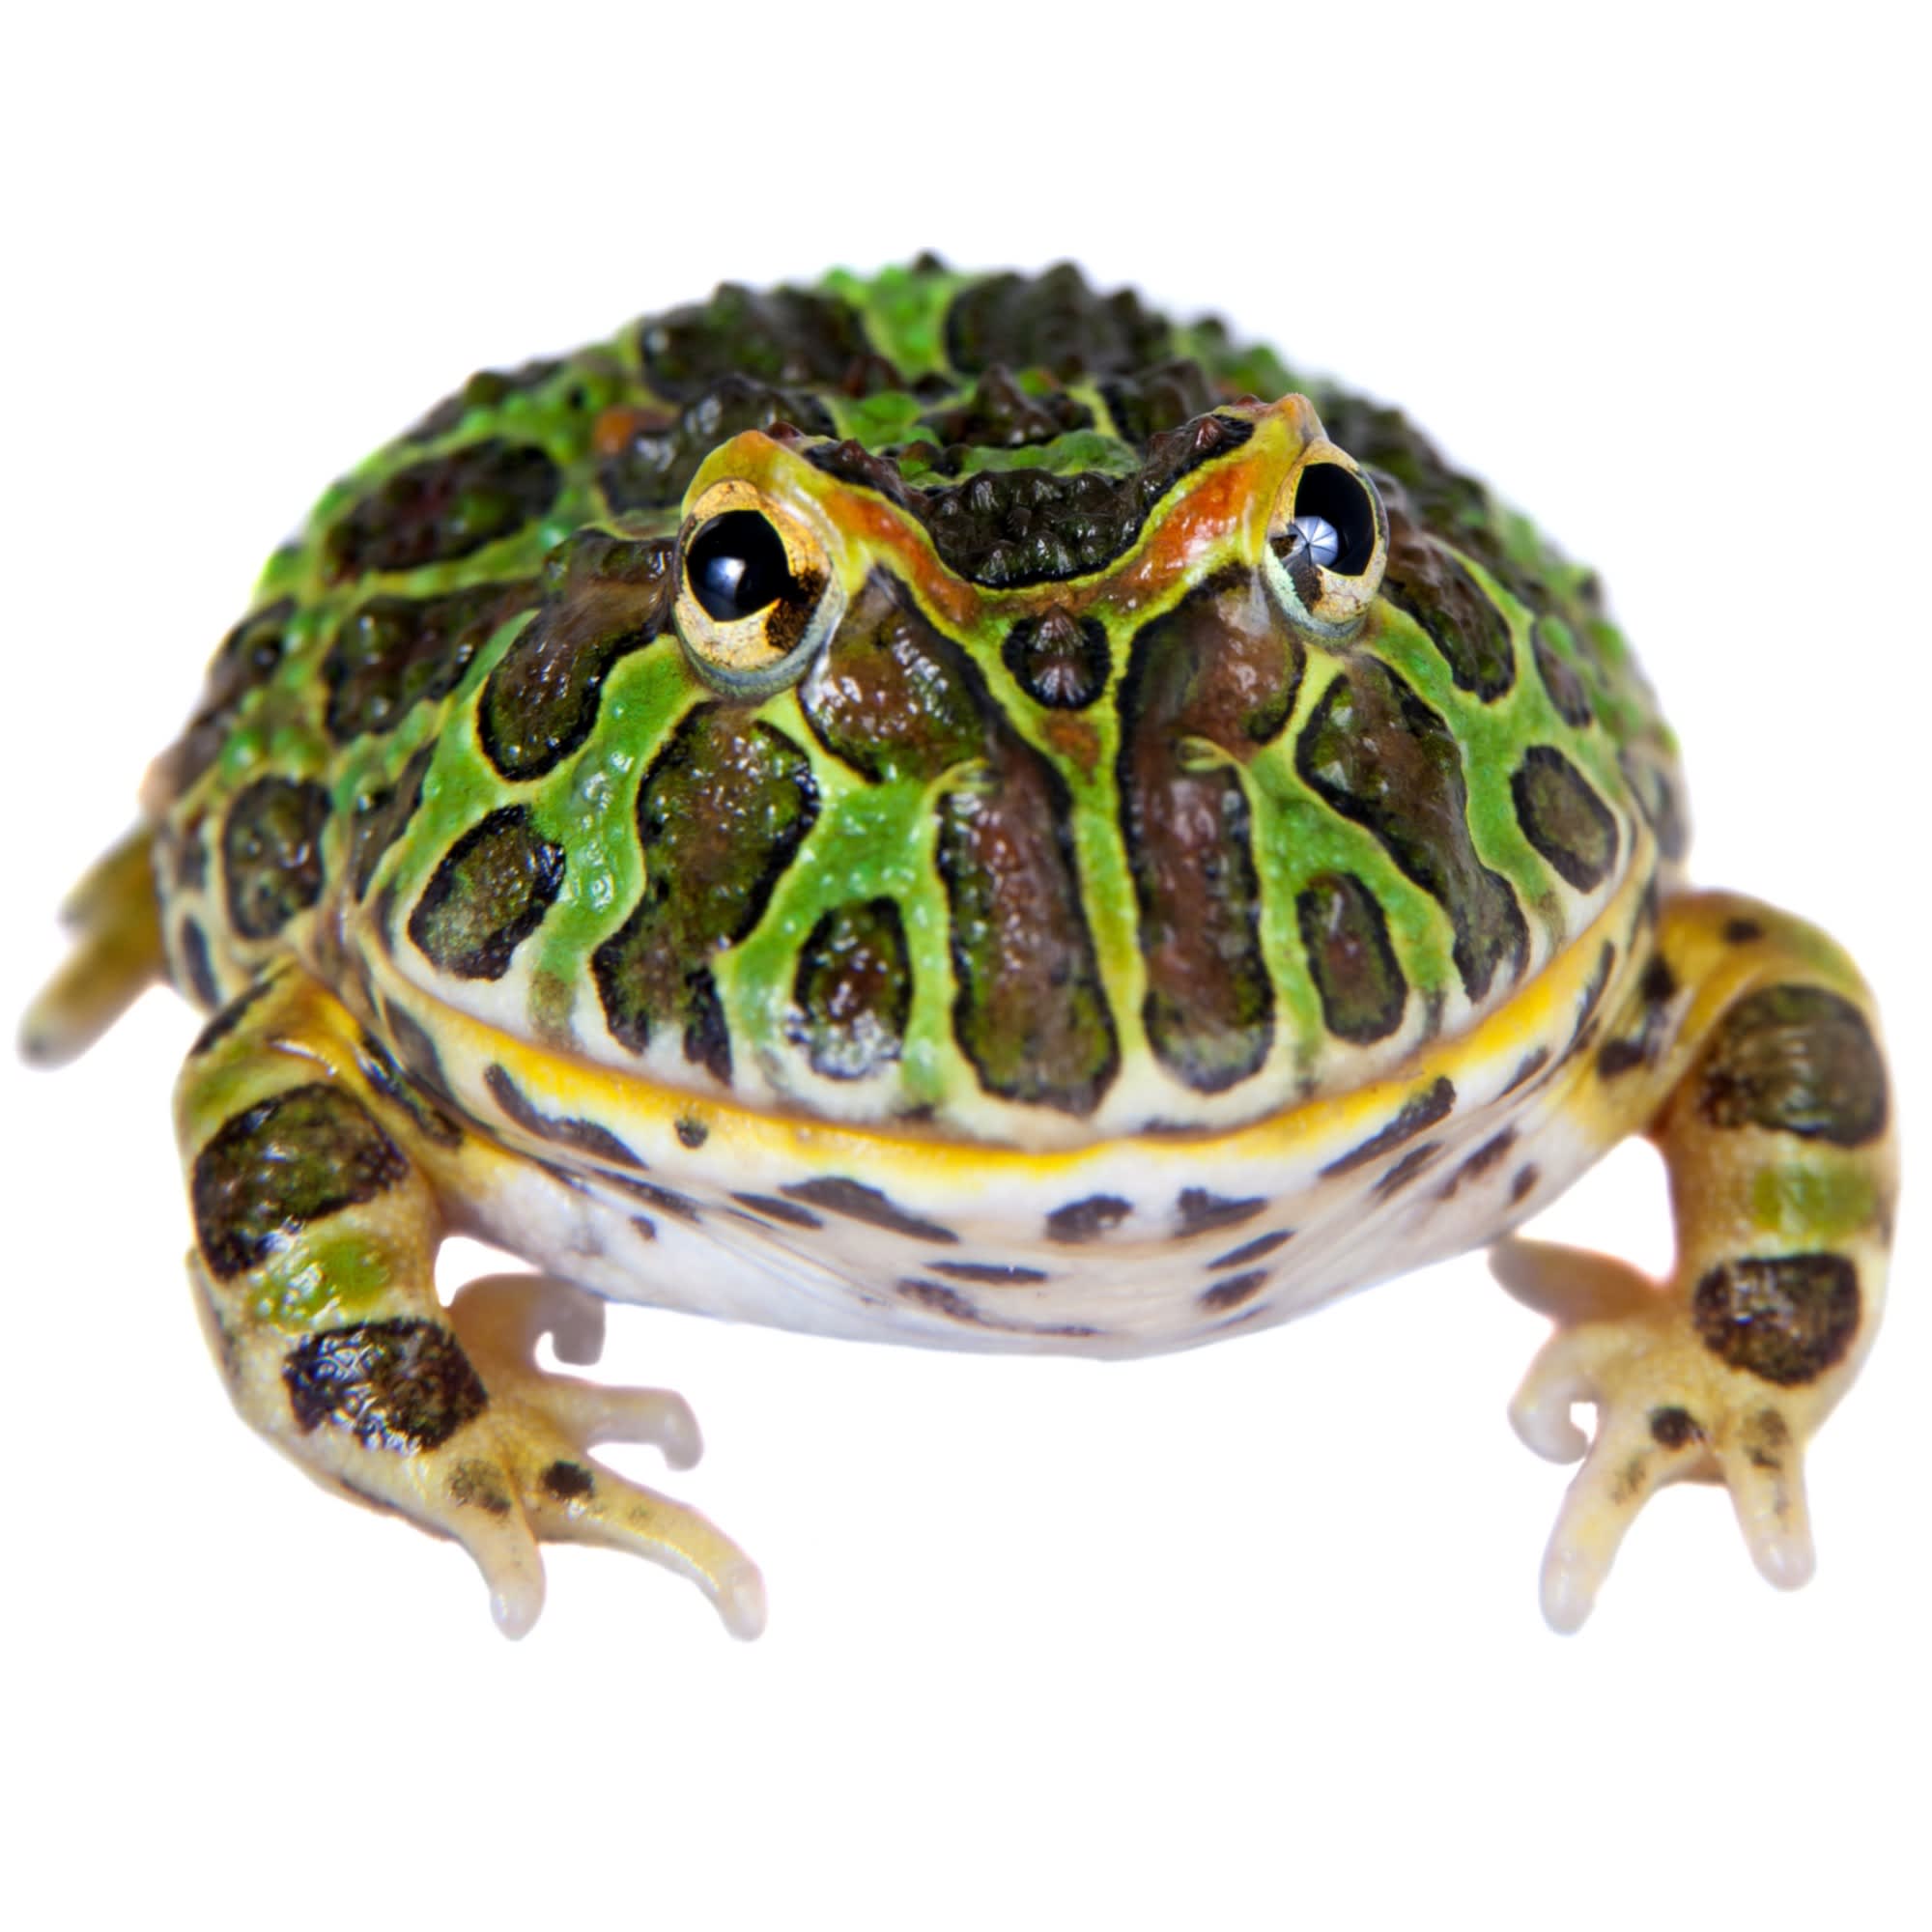 Detail Image Of A Frog Nomer 10